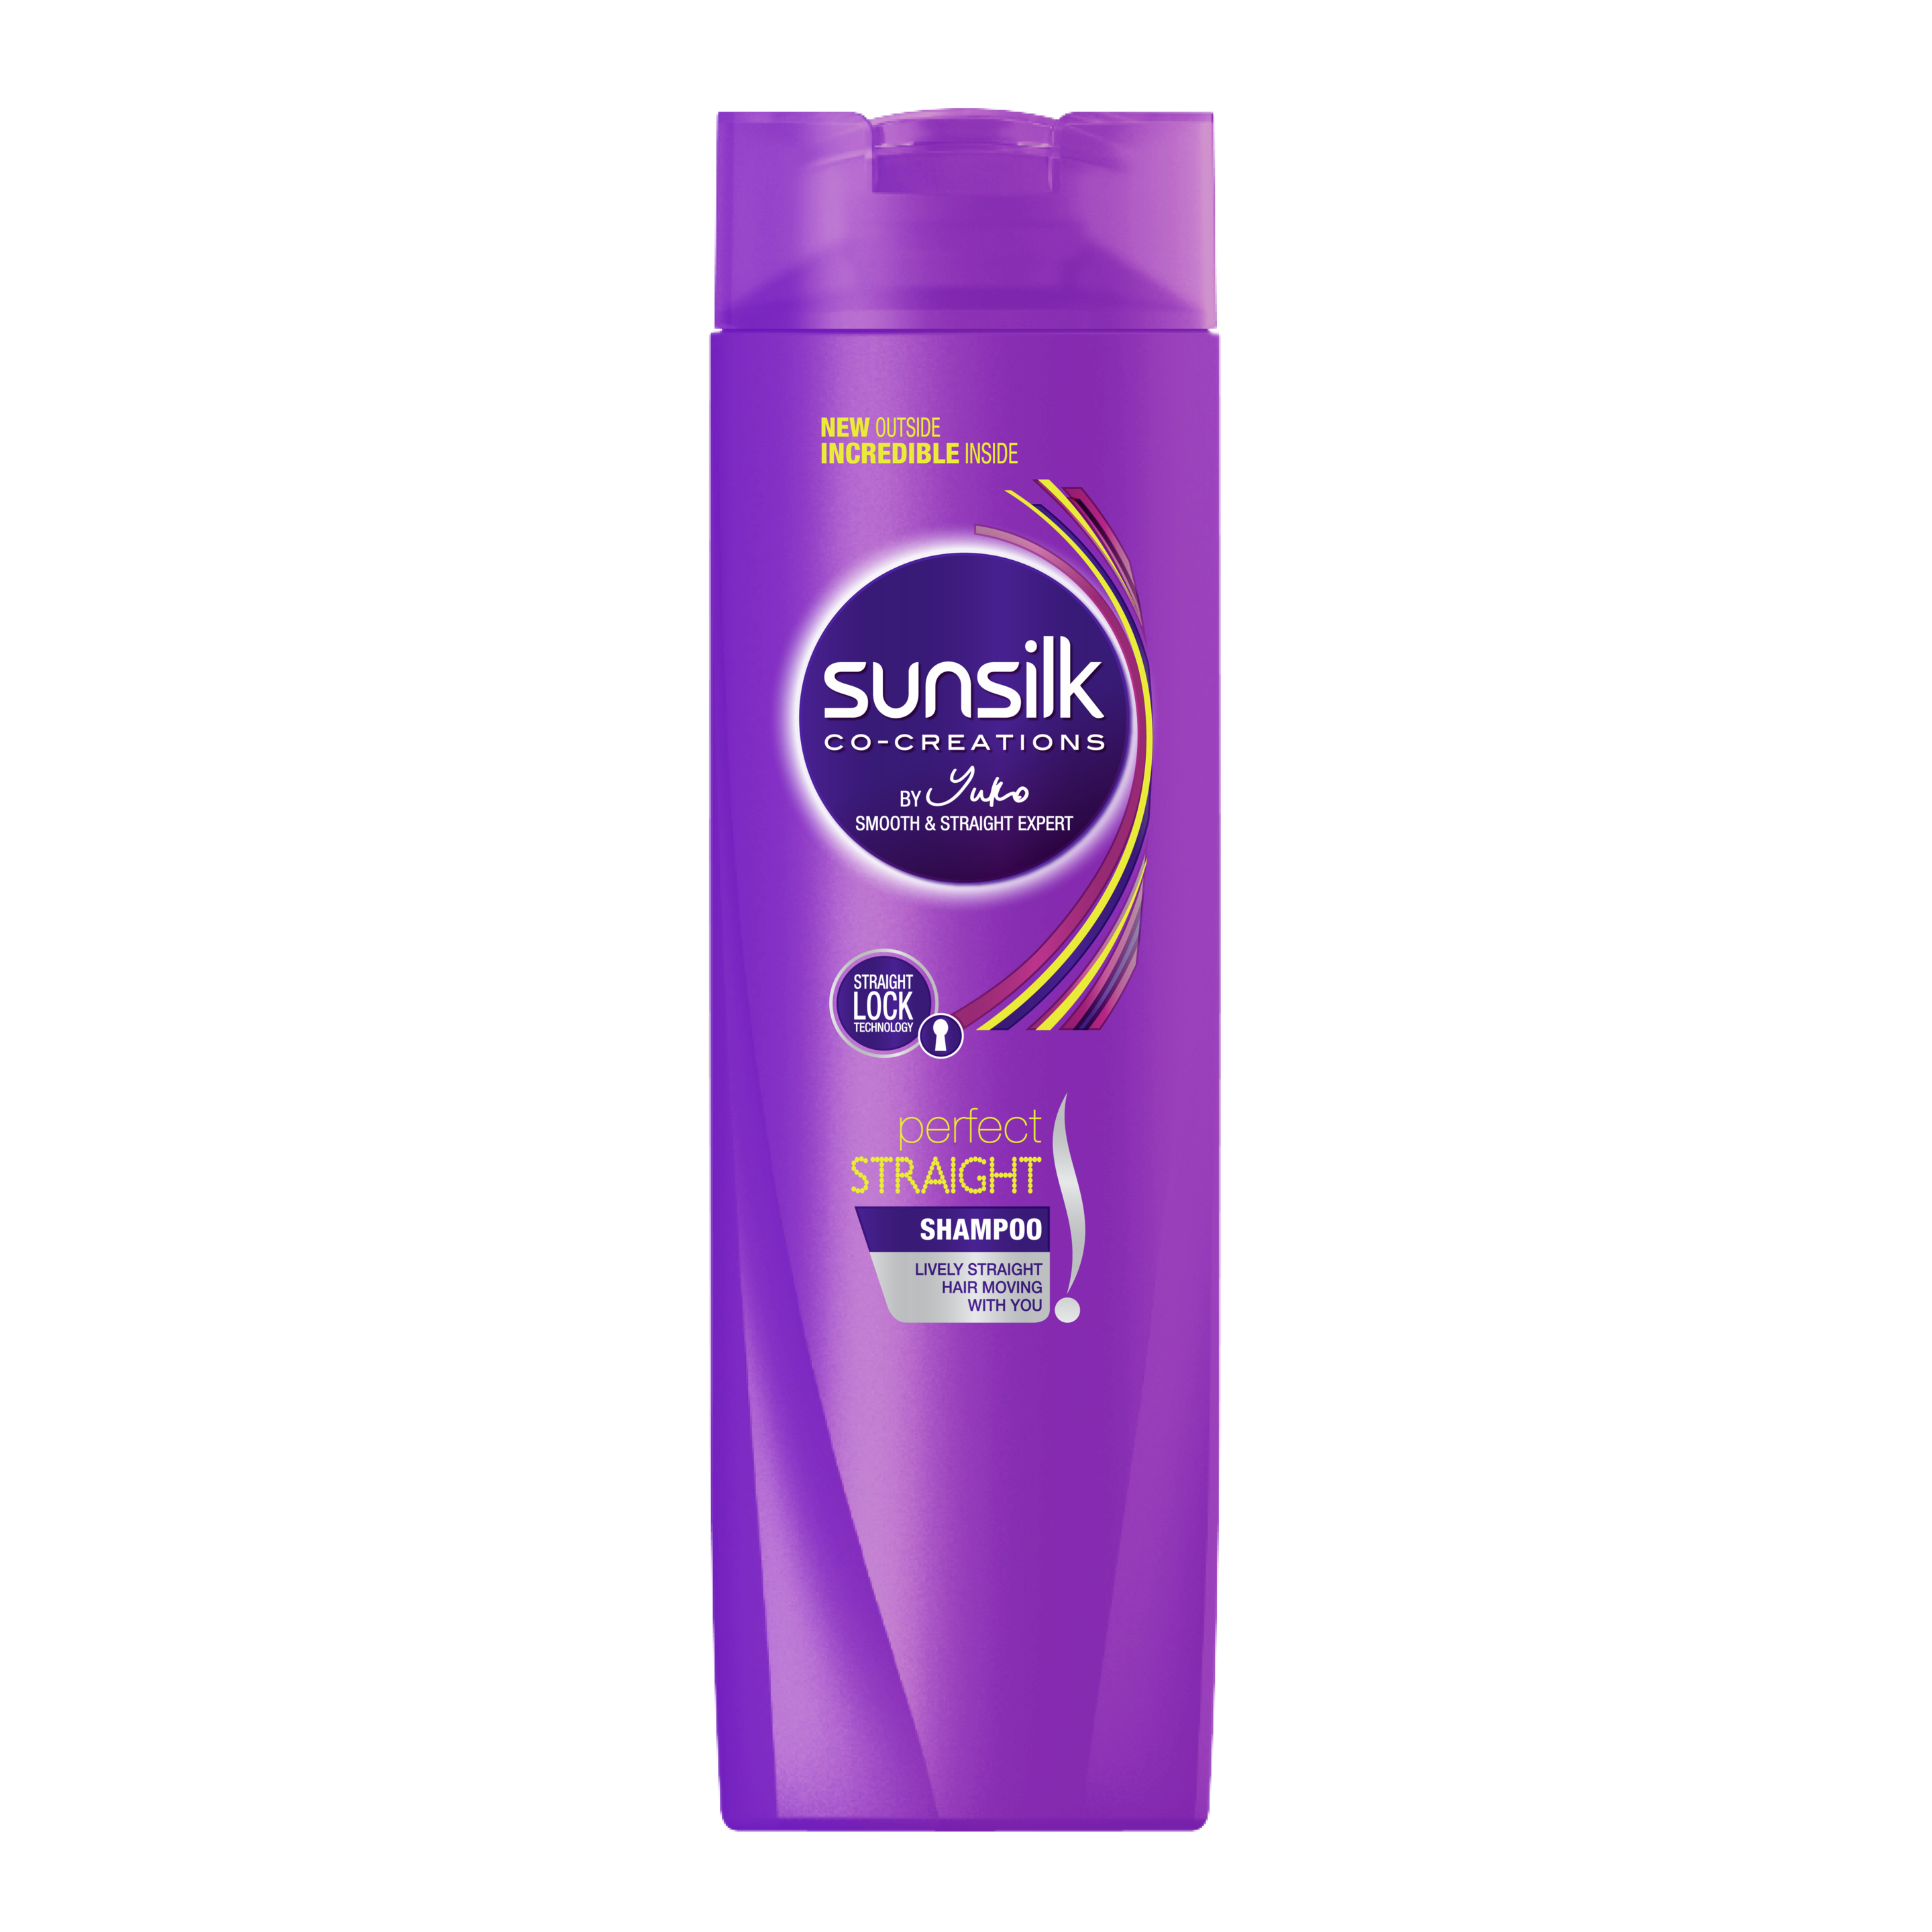 Sunsilk Perfect Straight Shampoo 160ml front of pack image